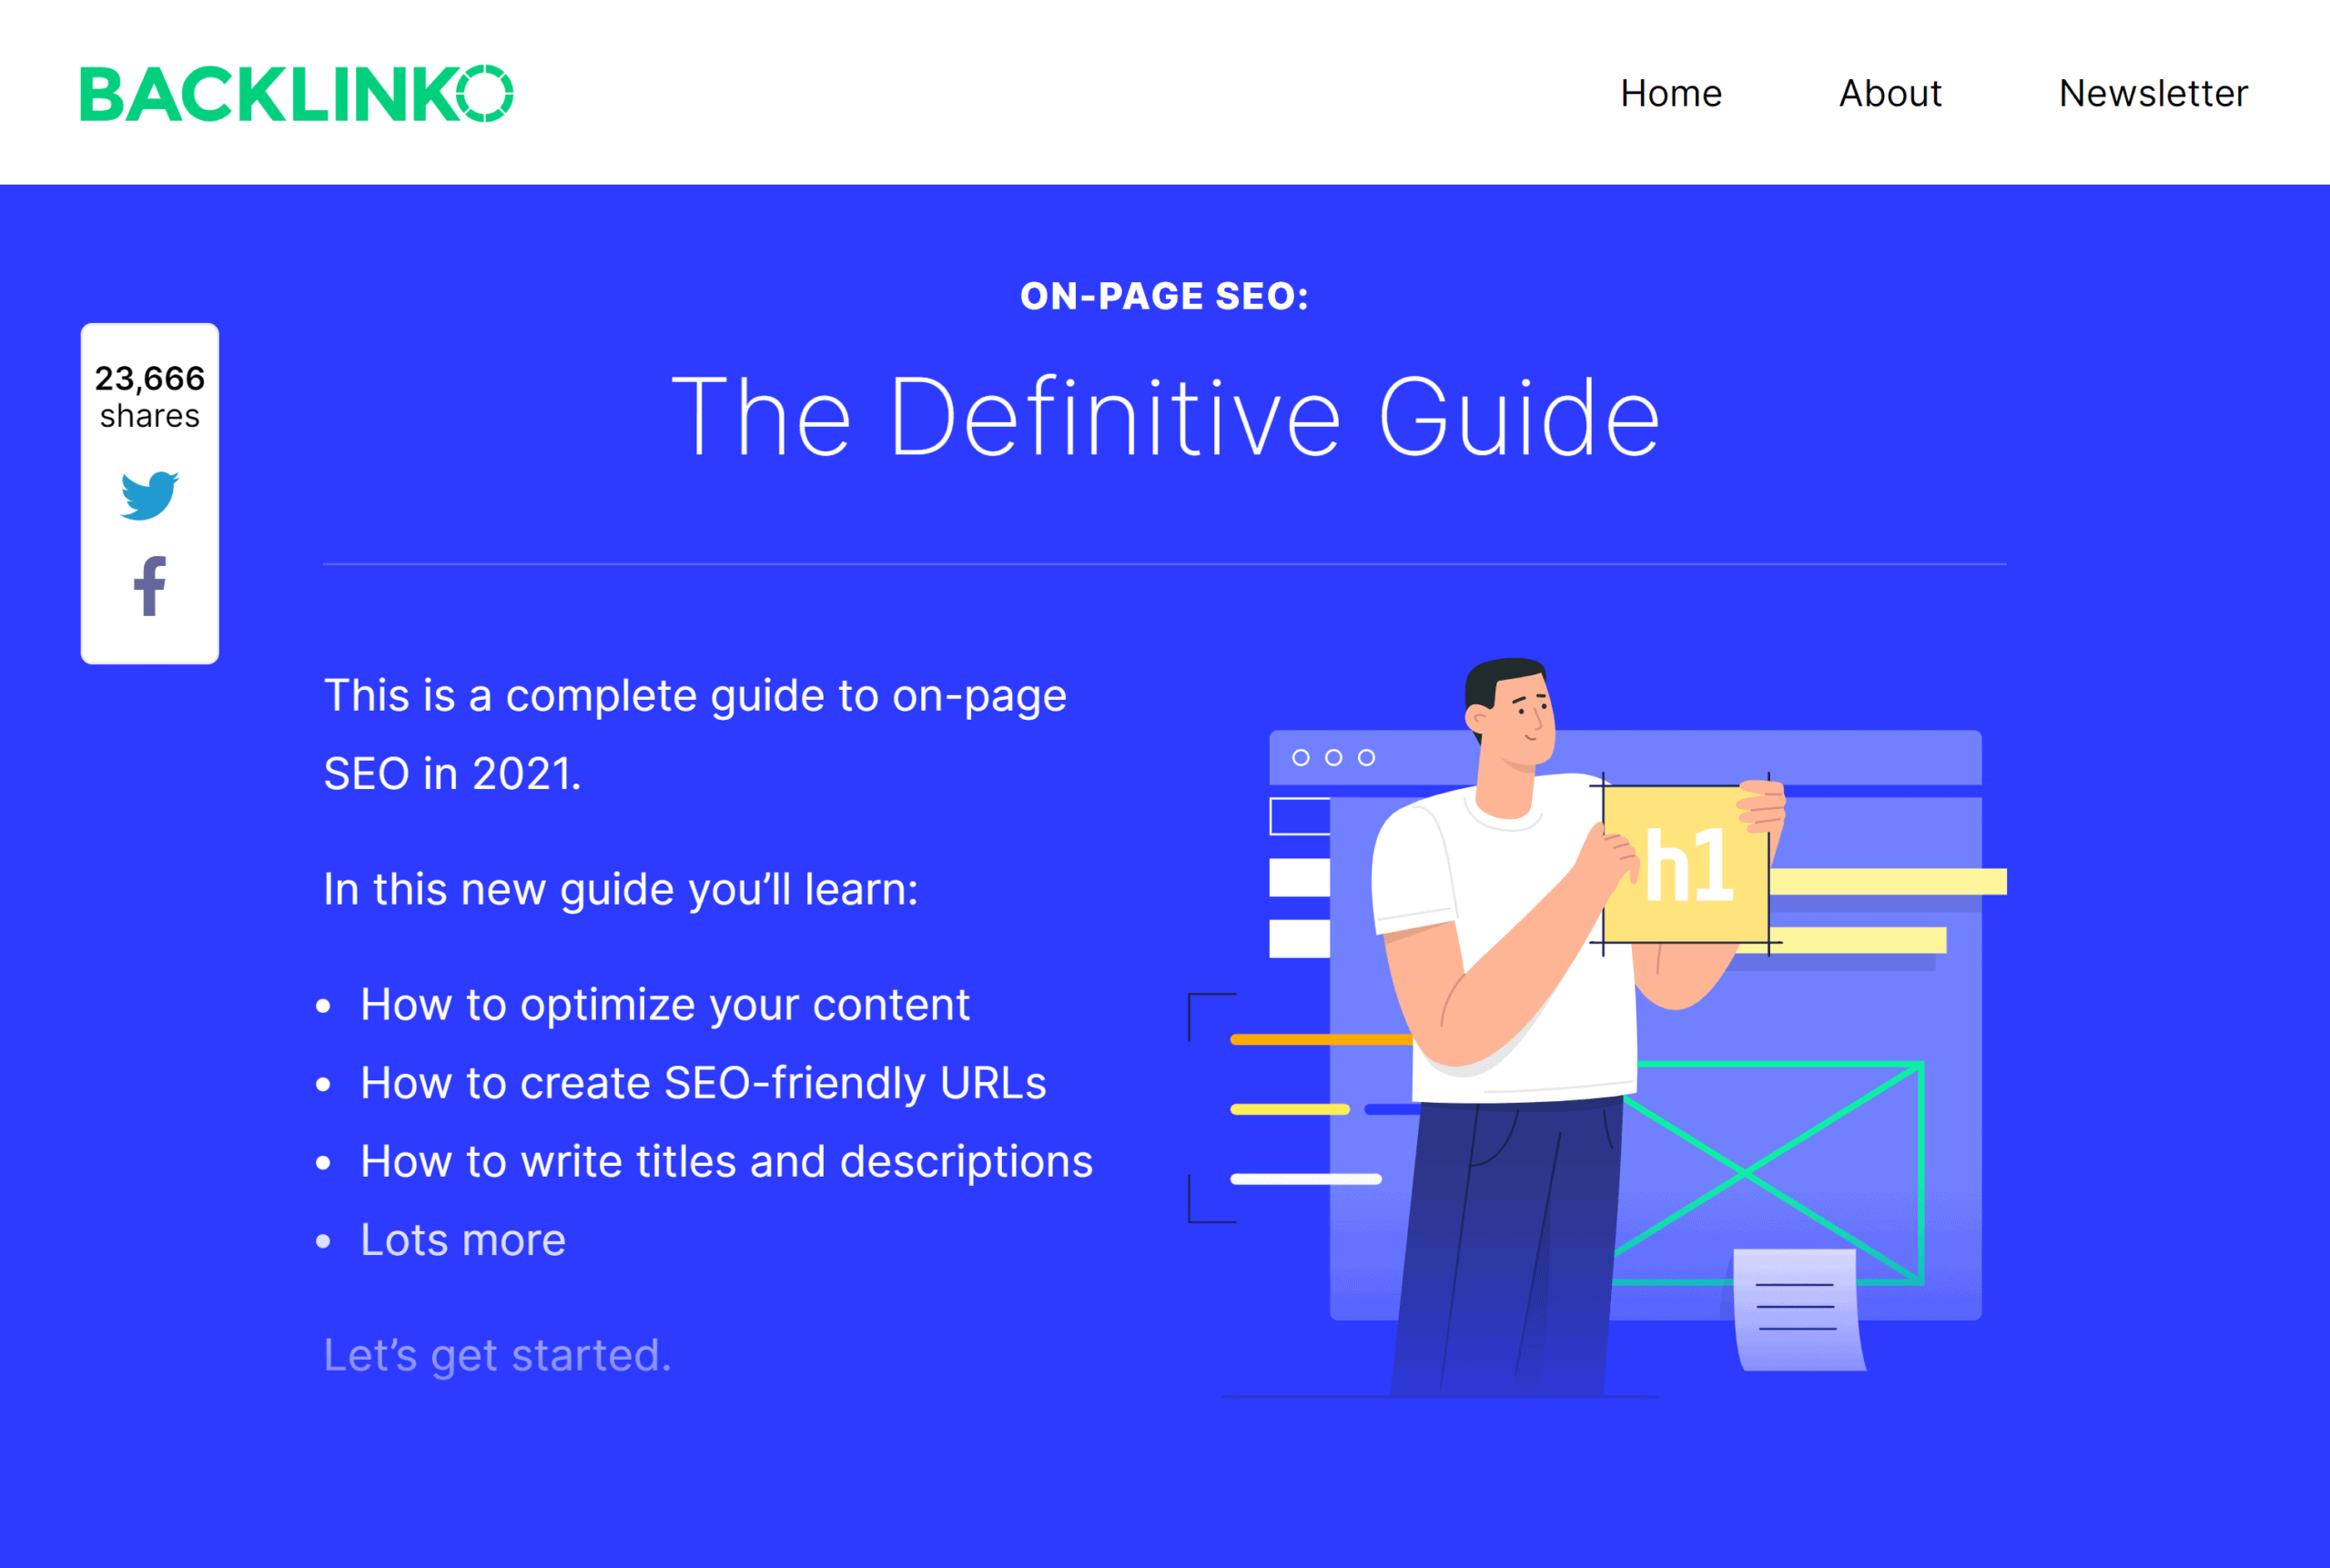 Backlinko – On-page SEO Guide